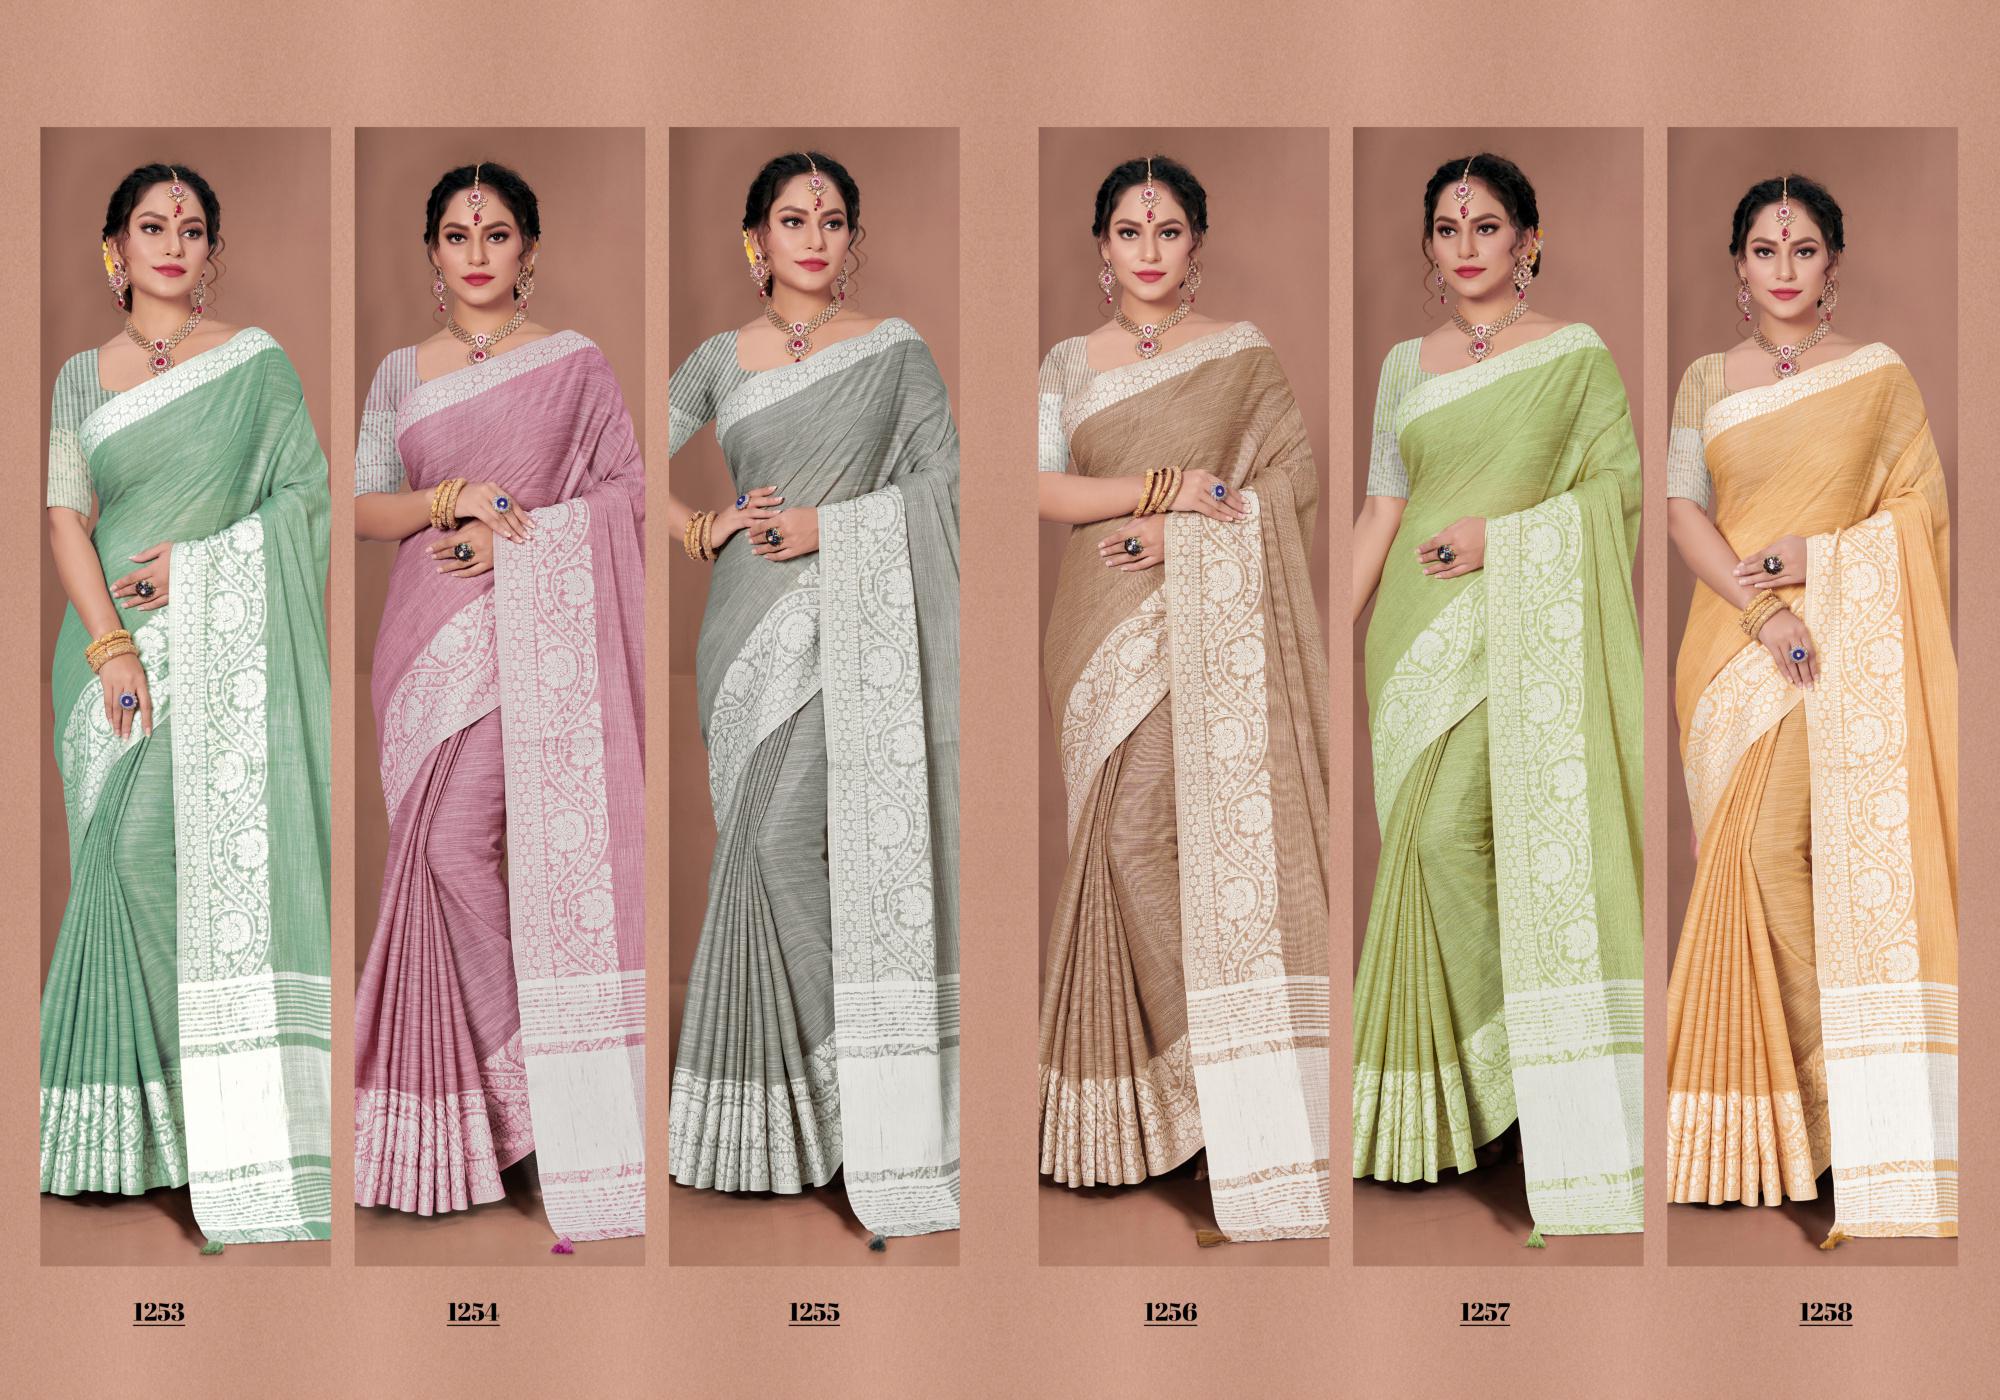 Sangam Prints Glamour Linen 1253-1258